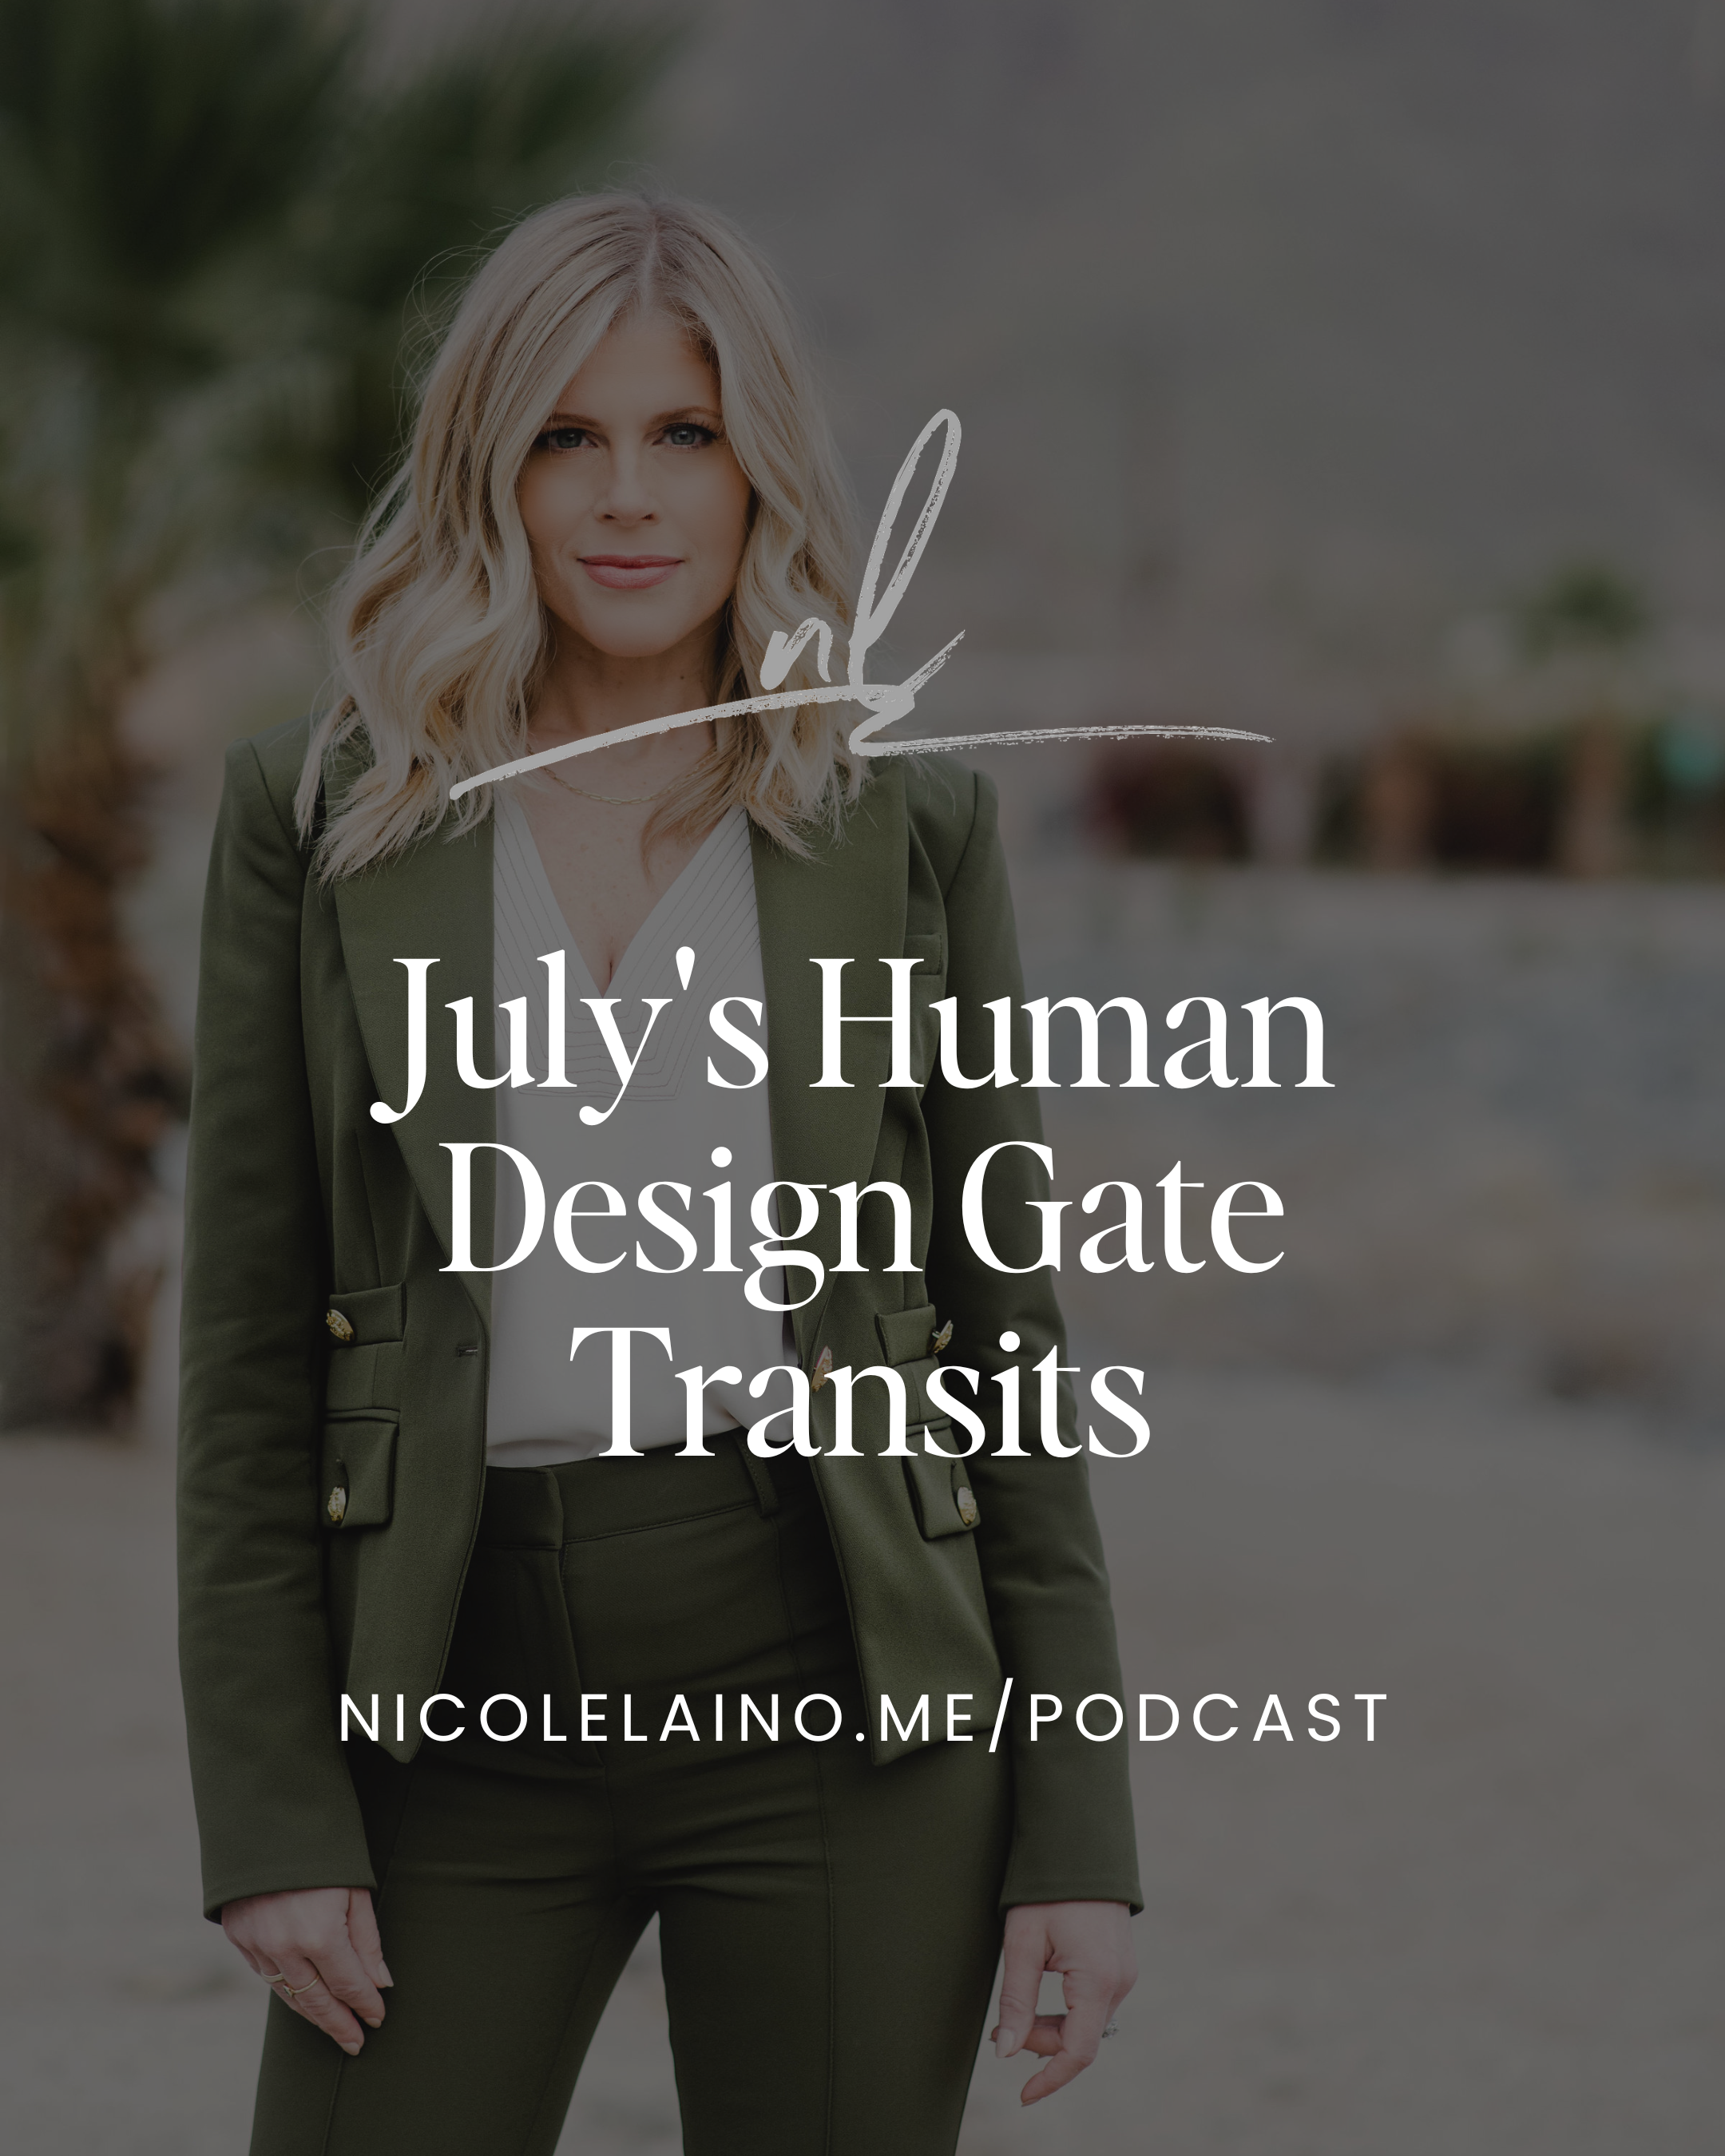 July's Human Design Gate Transits